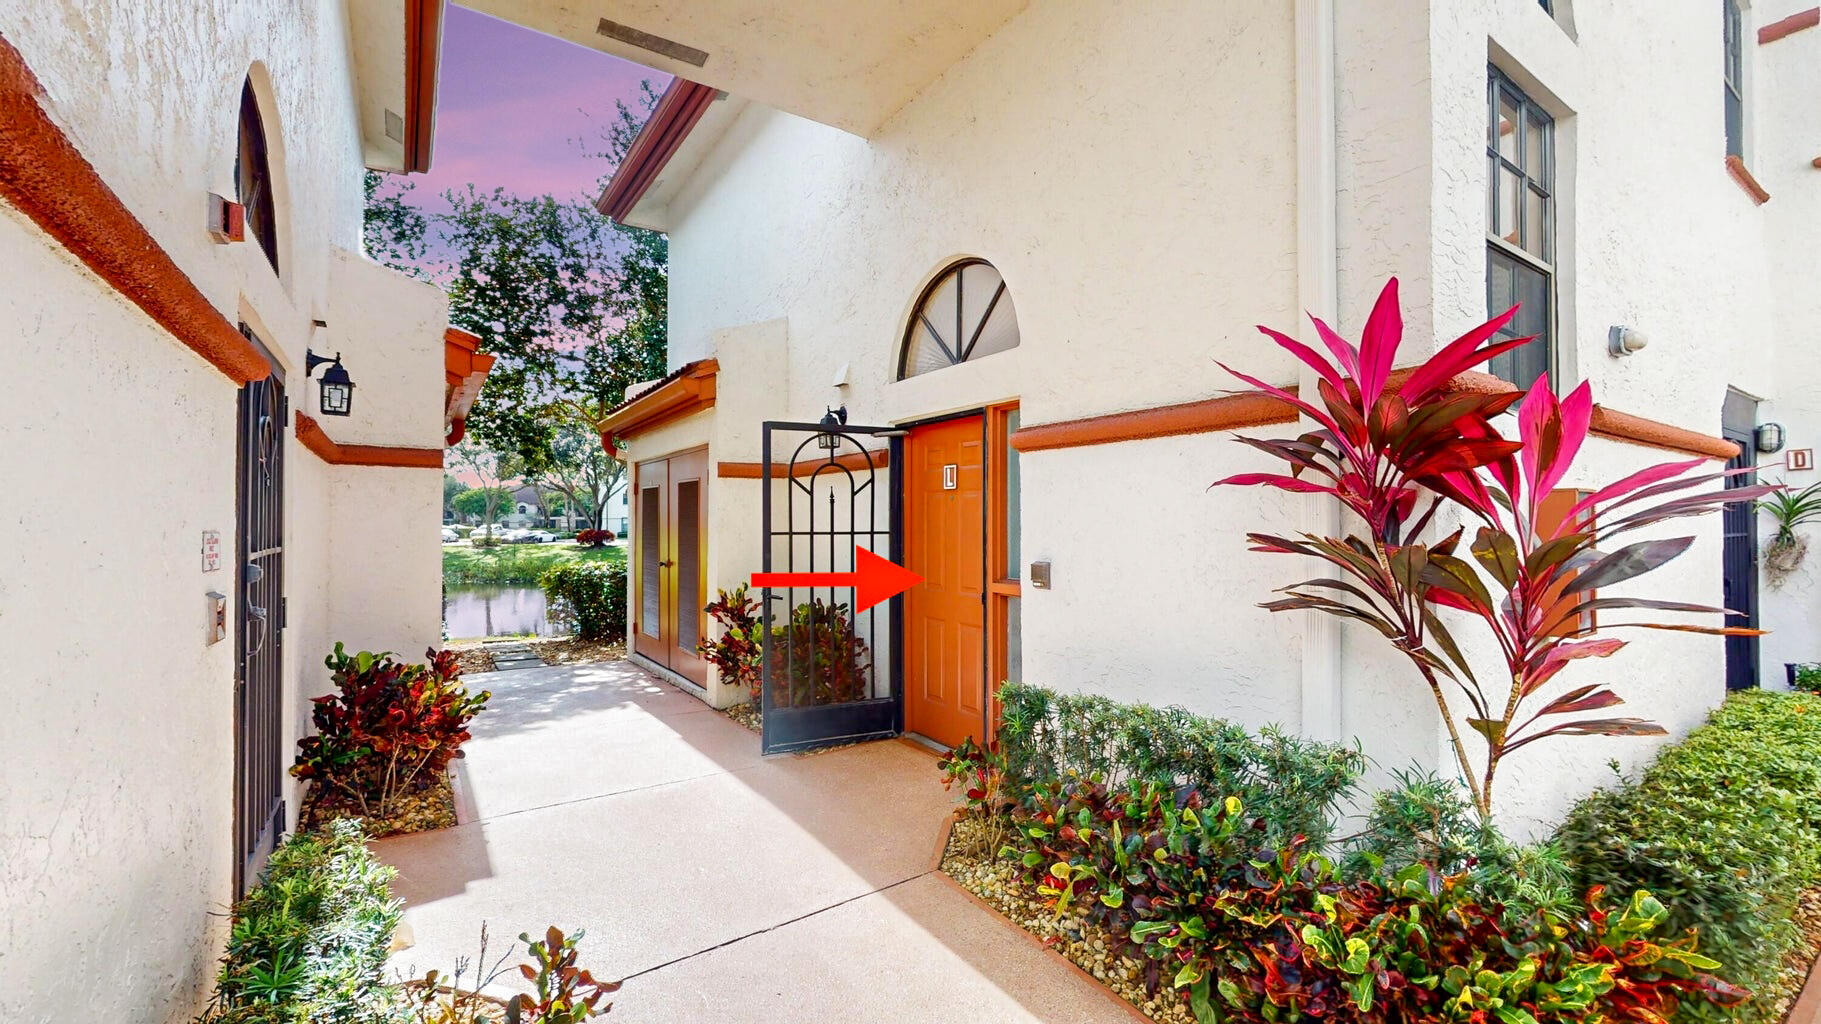 Property for Sale at 5159 Brisata Circle L, Boynton Beach, Palm Beach County, Florida - Bedrooms: 3 
Bathrooms: 2  - $310,000